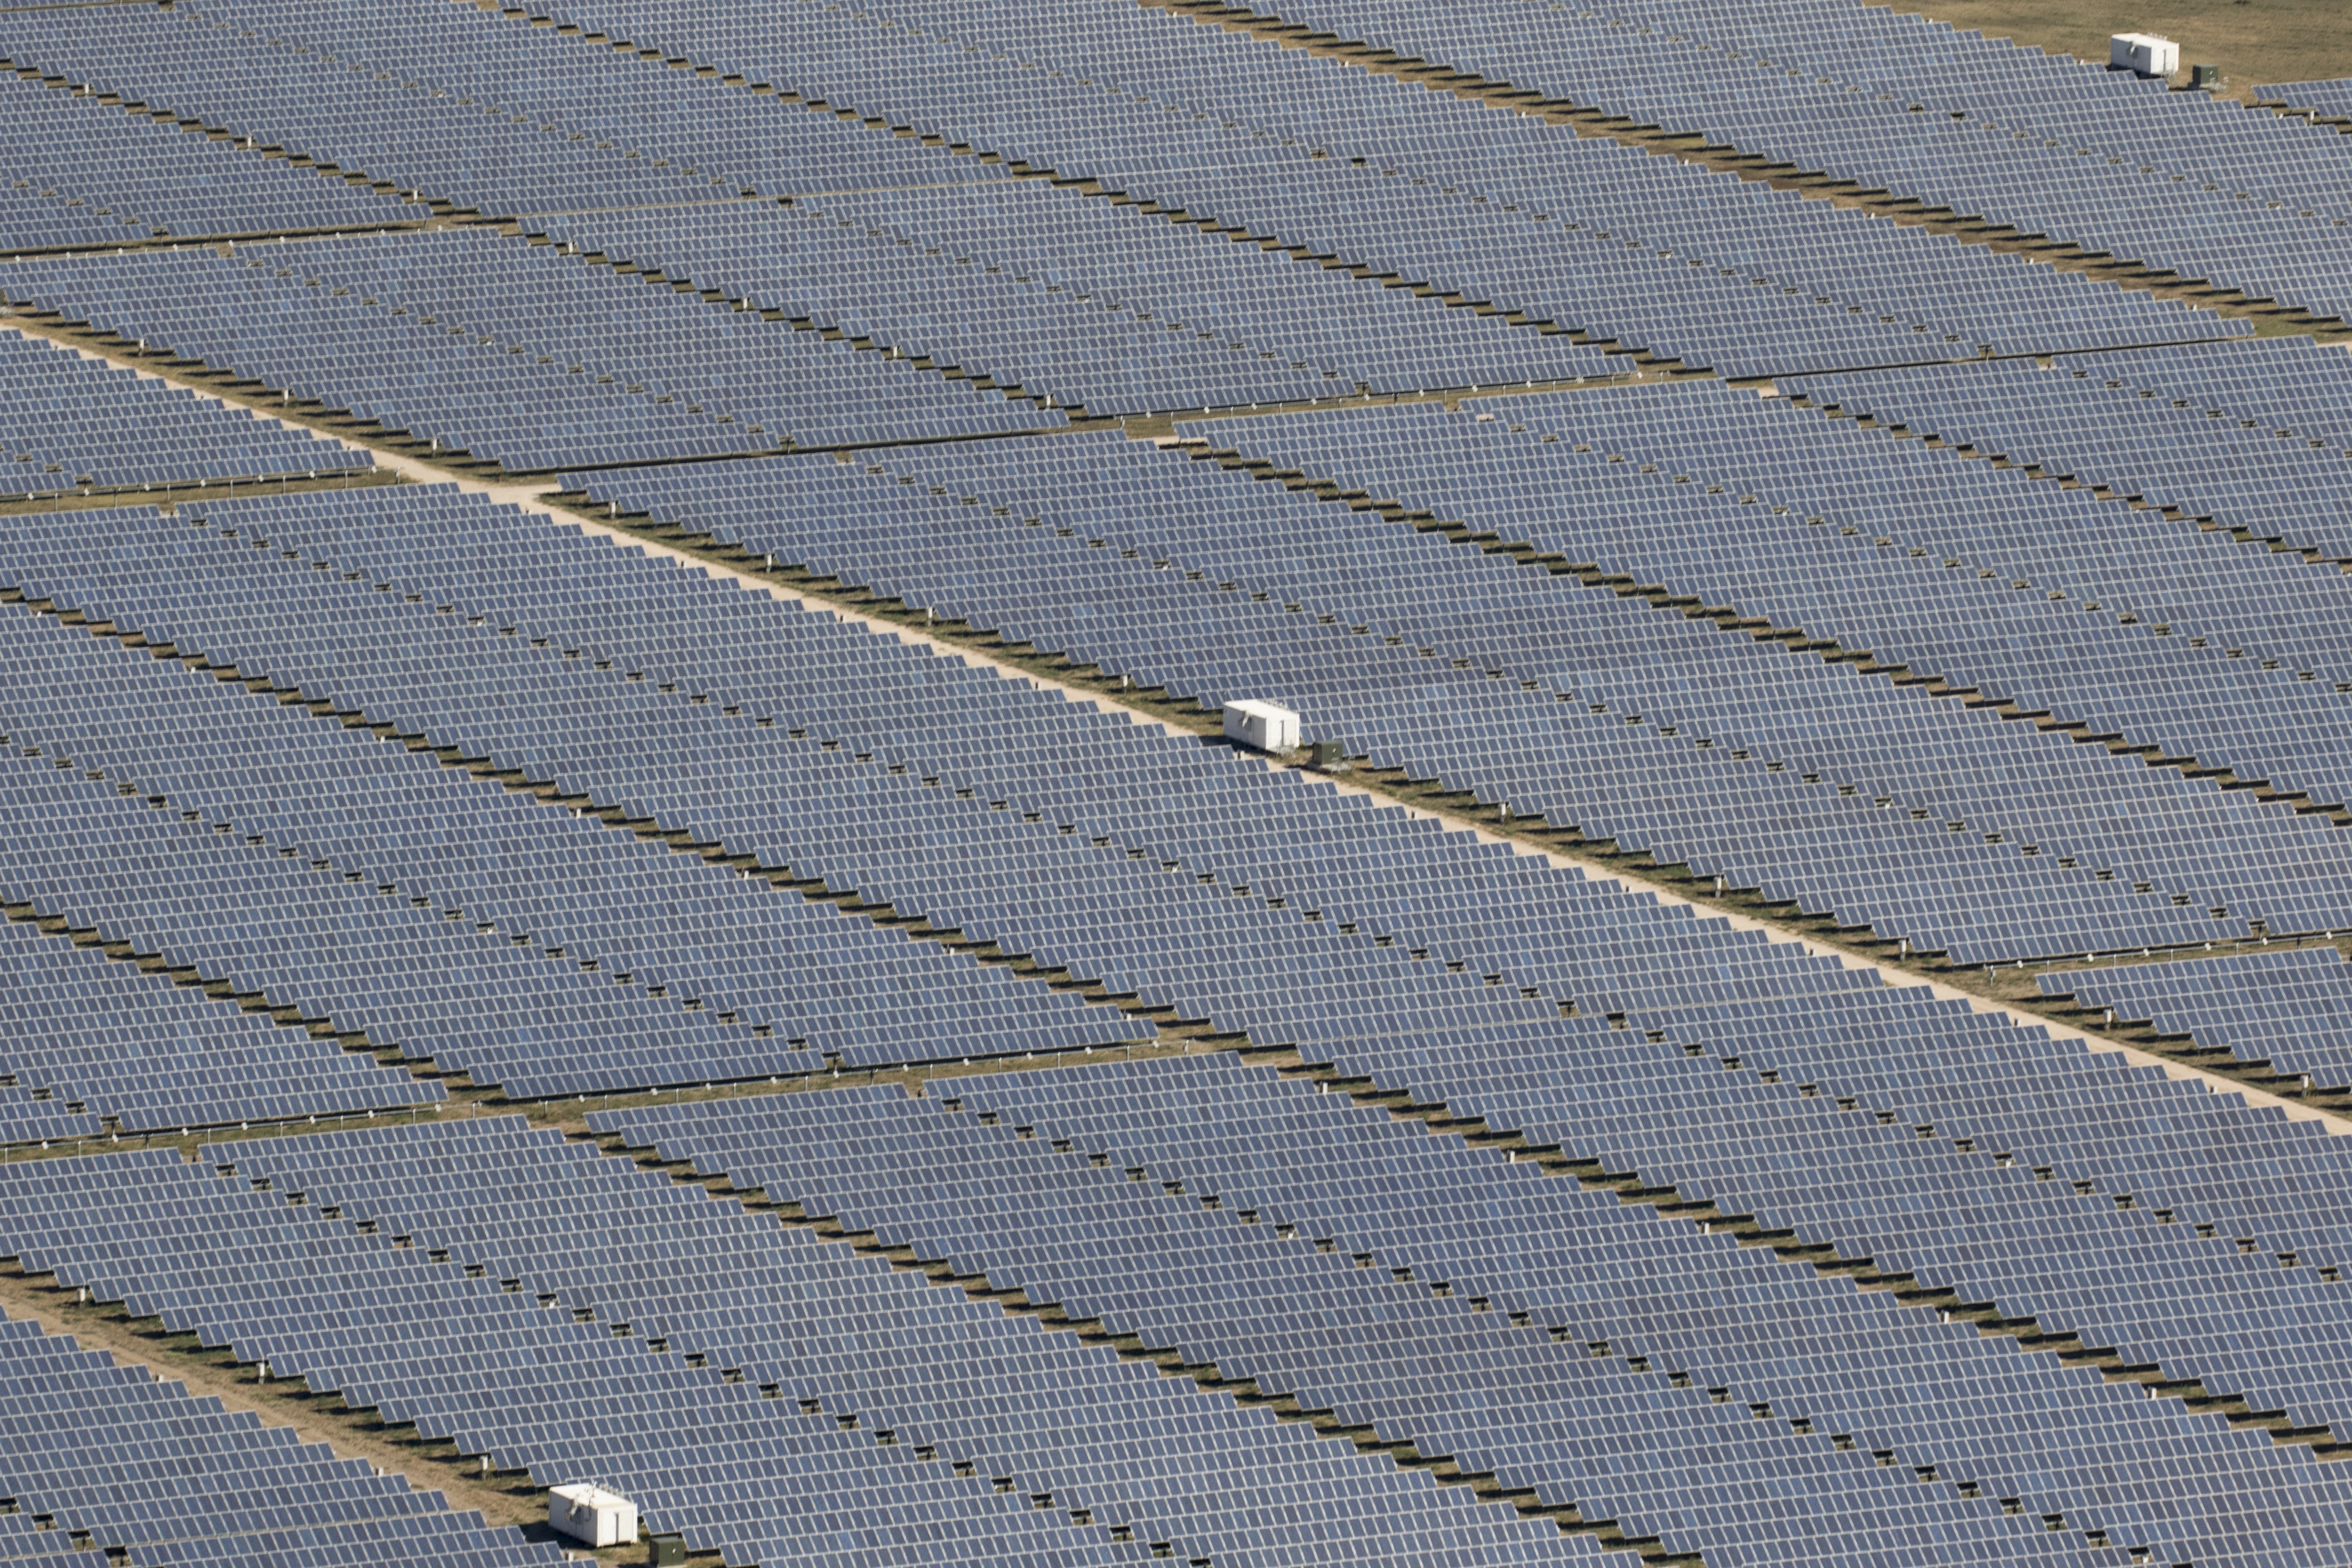 Large-scale solar power plant (albradenphoto.com)